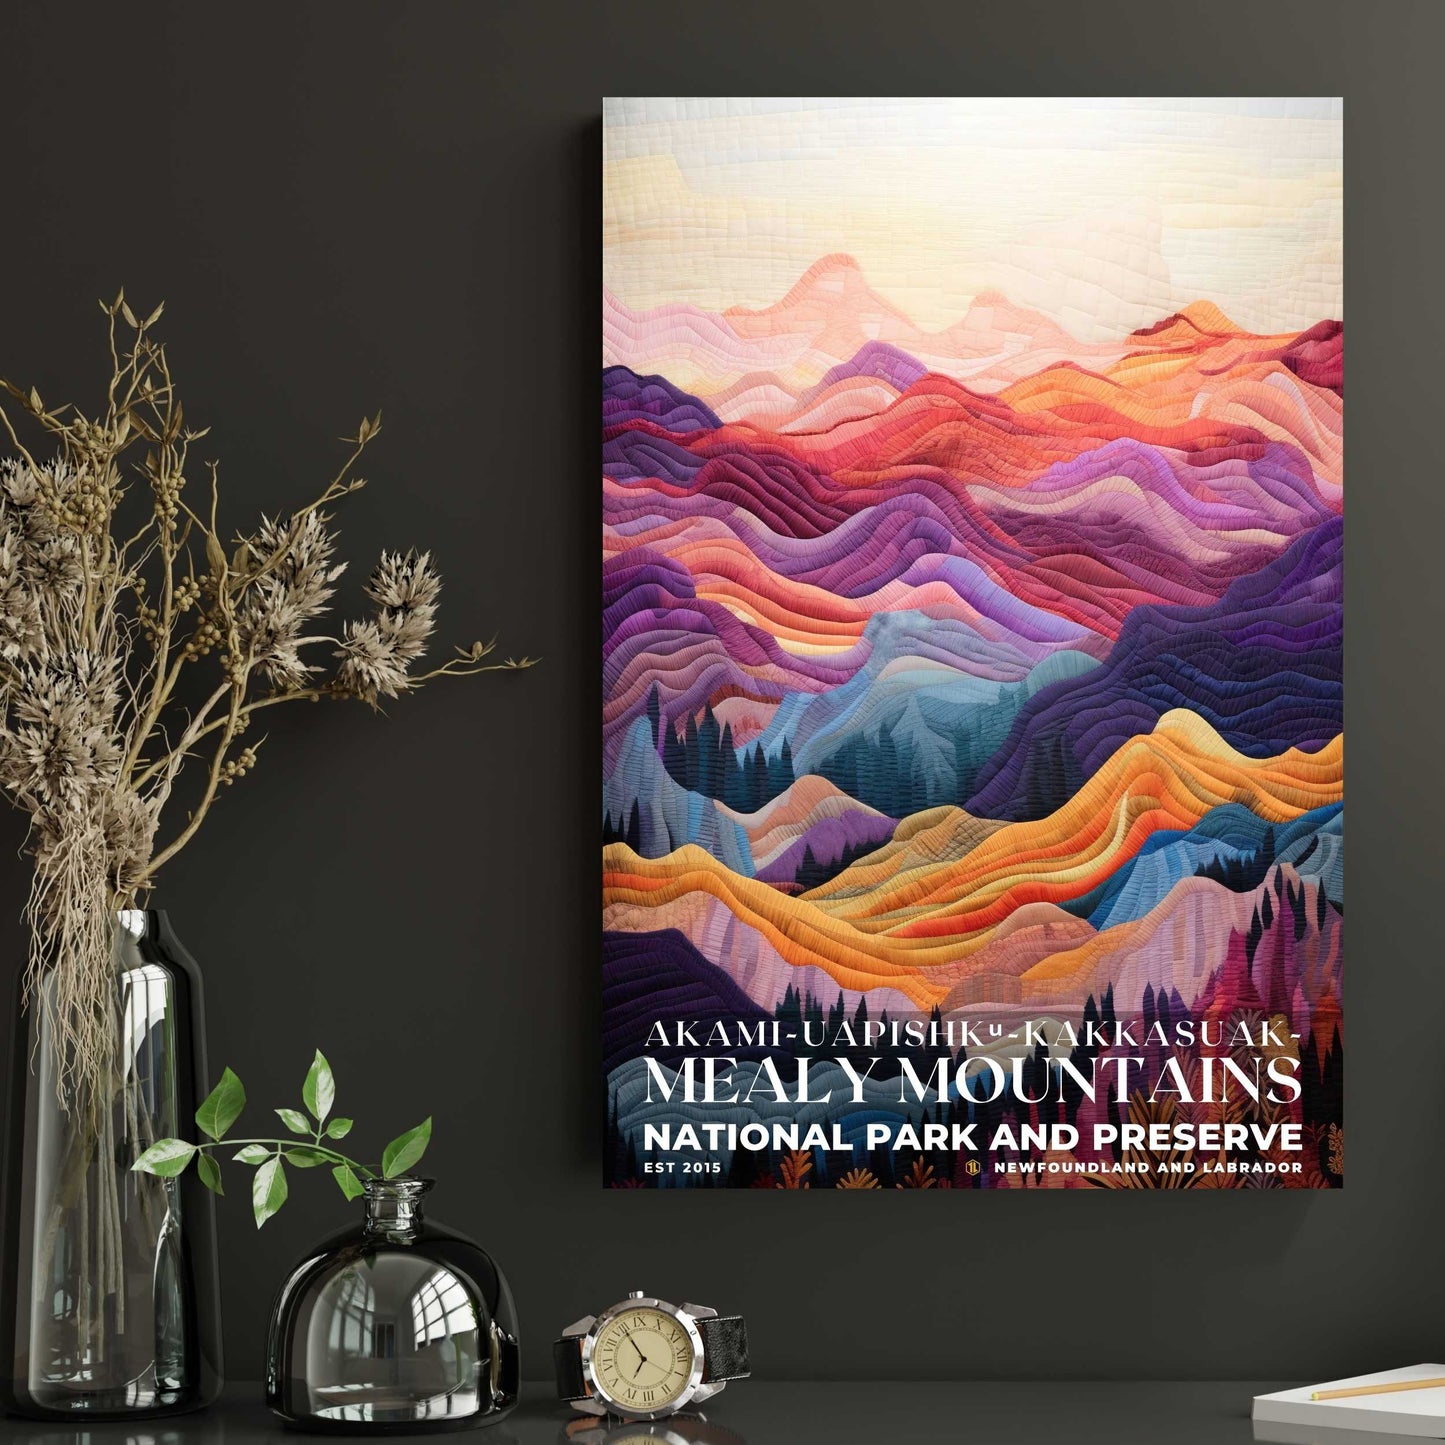 Akami-Uapishk-KakKasuak-Mealy Mountains National Park Poster | S09